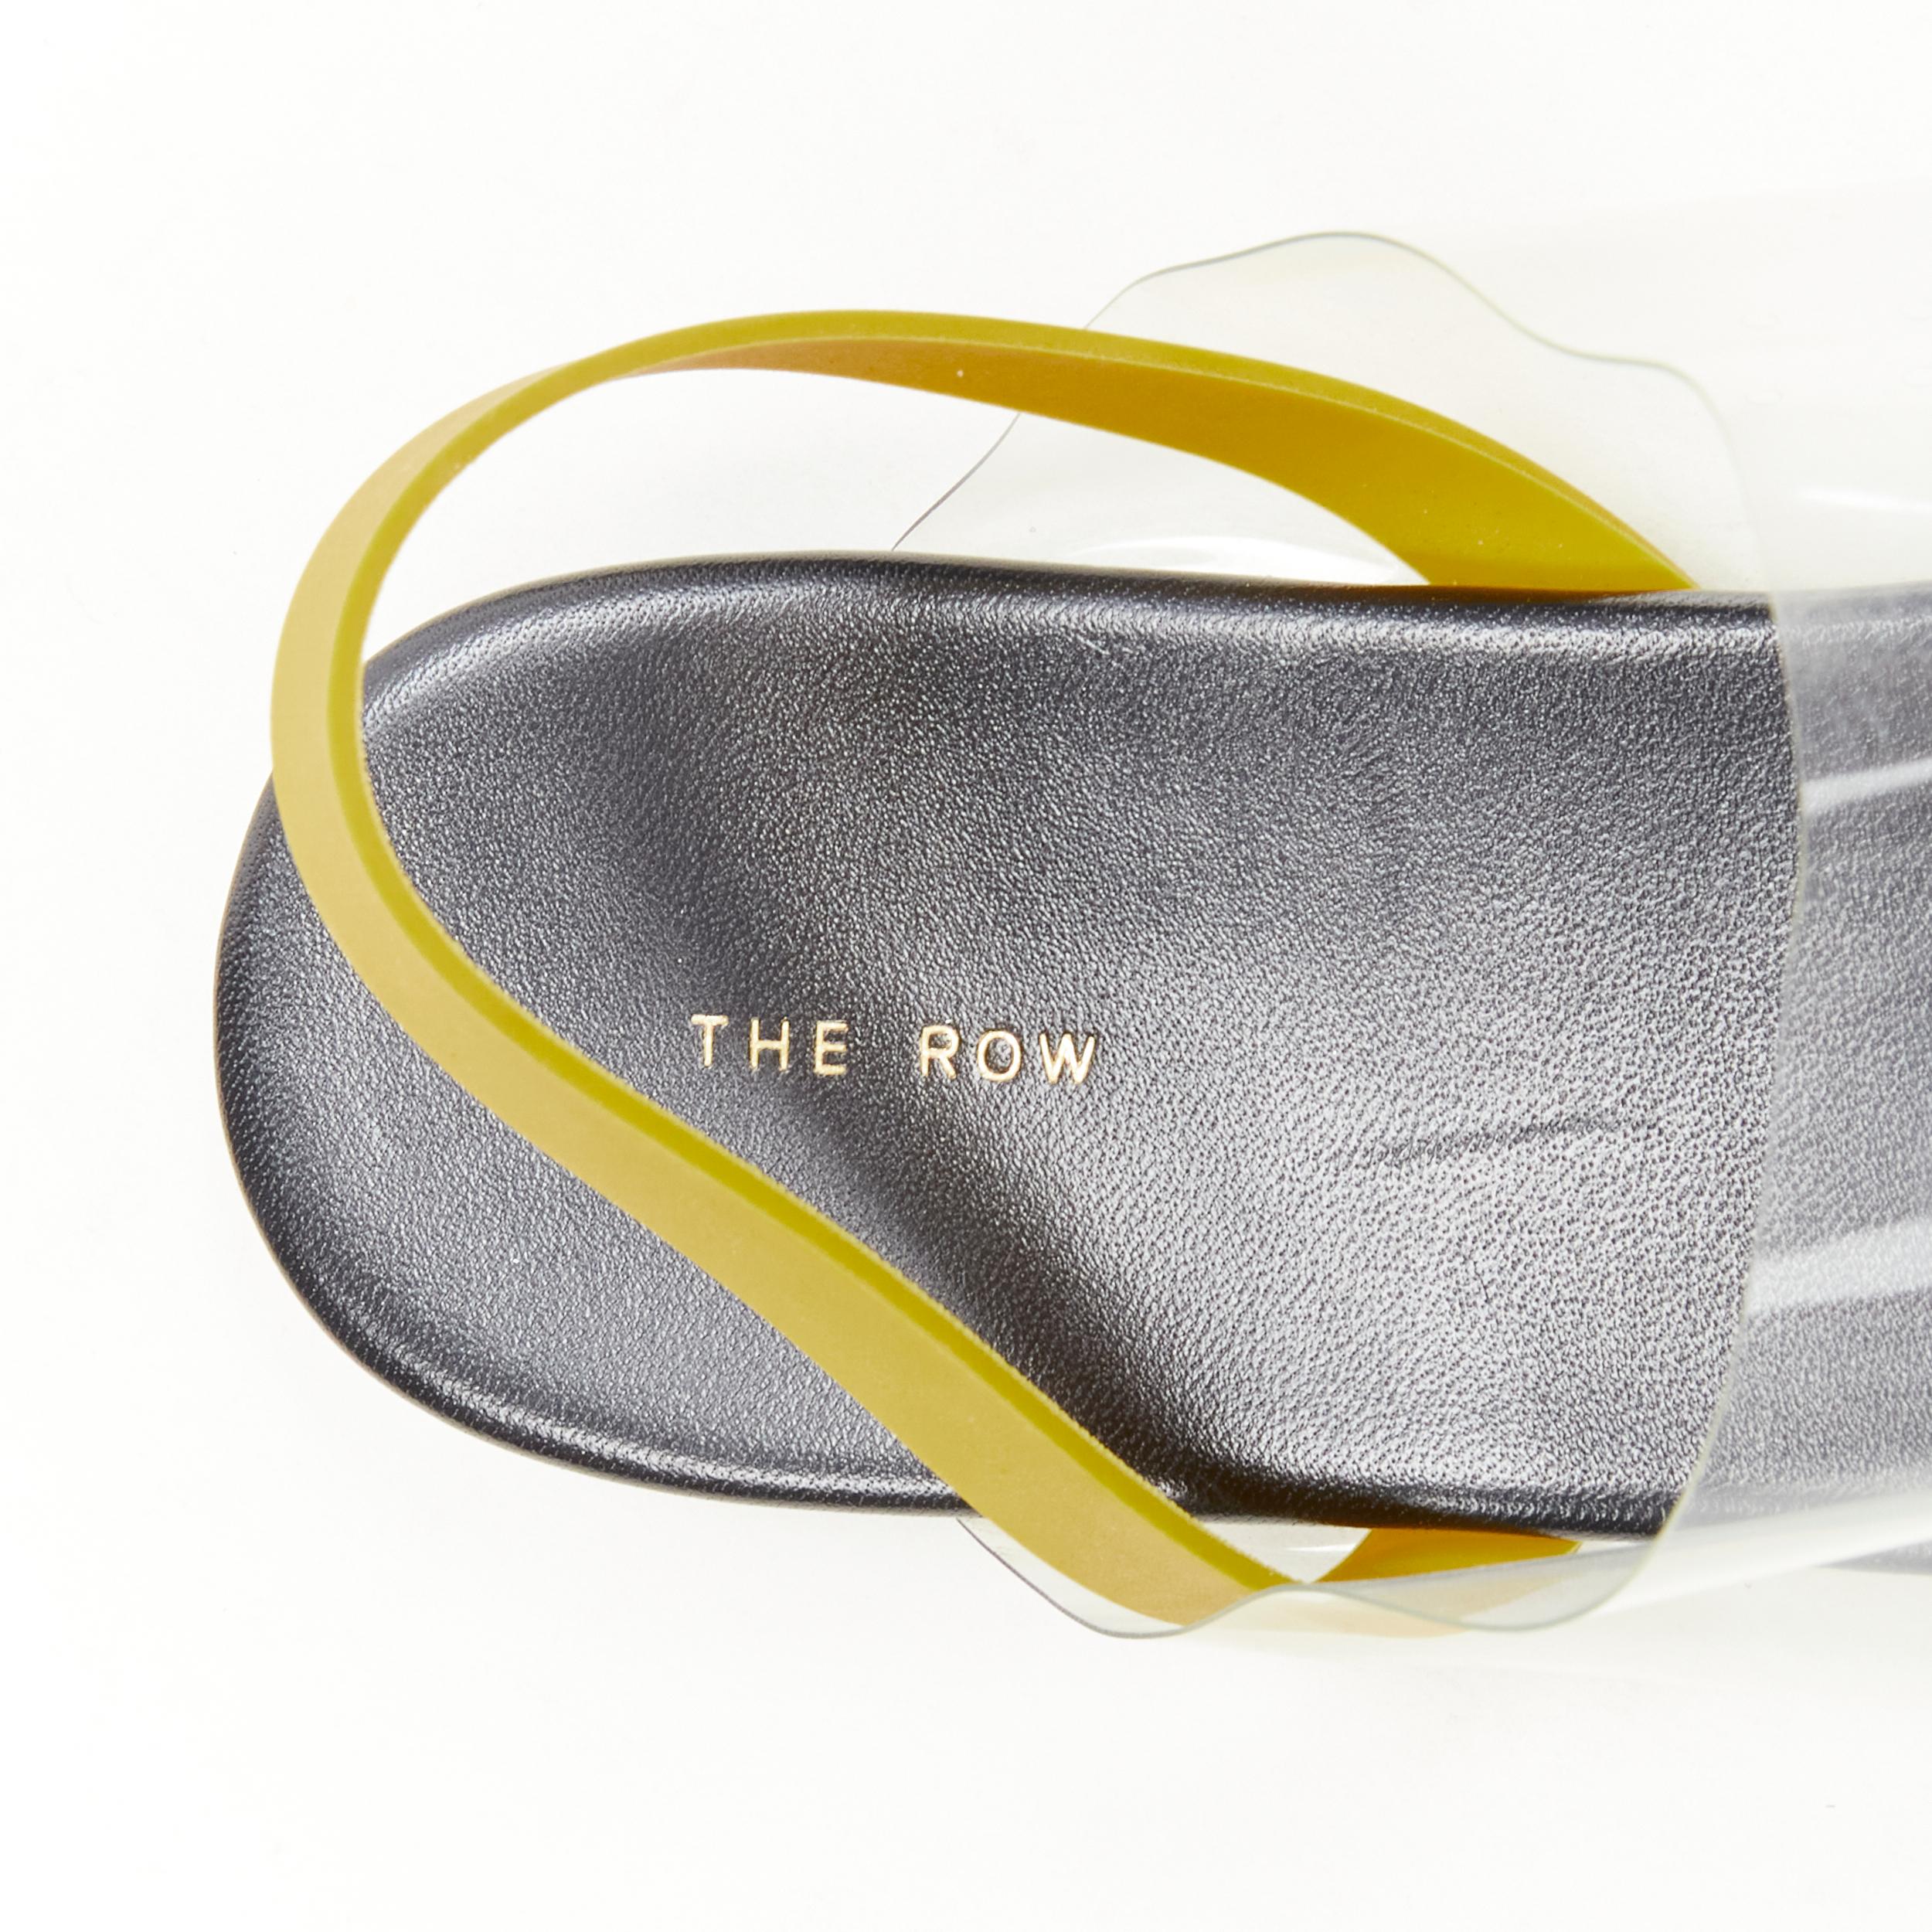 new THE ROW Clear PVC open toe yellow rubber slingback flat sandal EU36.5 5